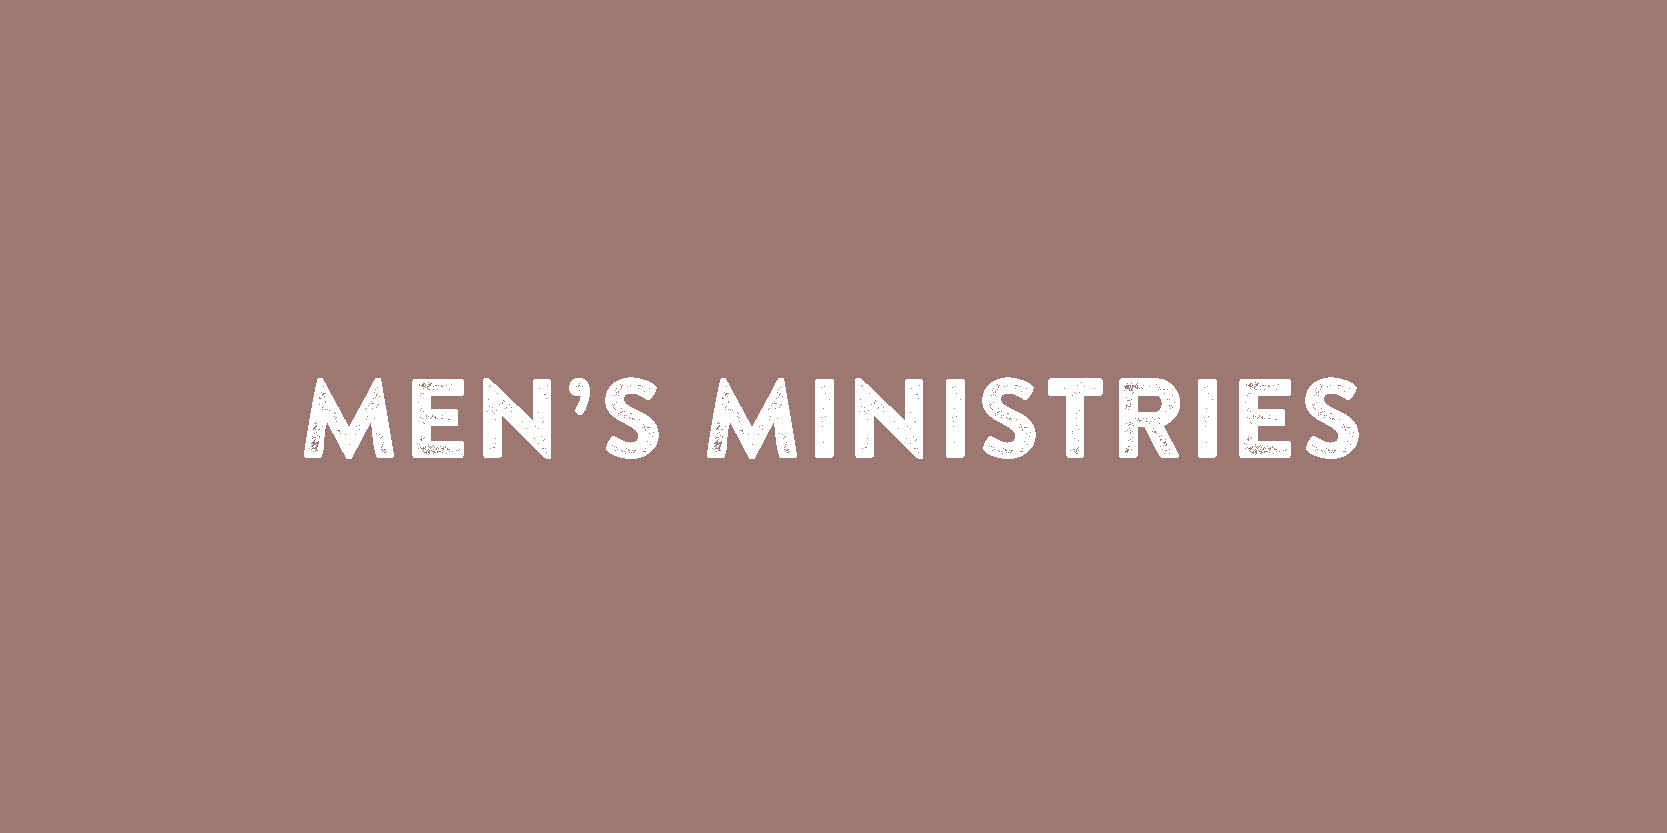 Mens ministries